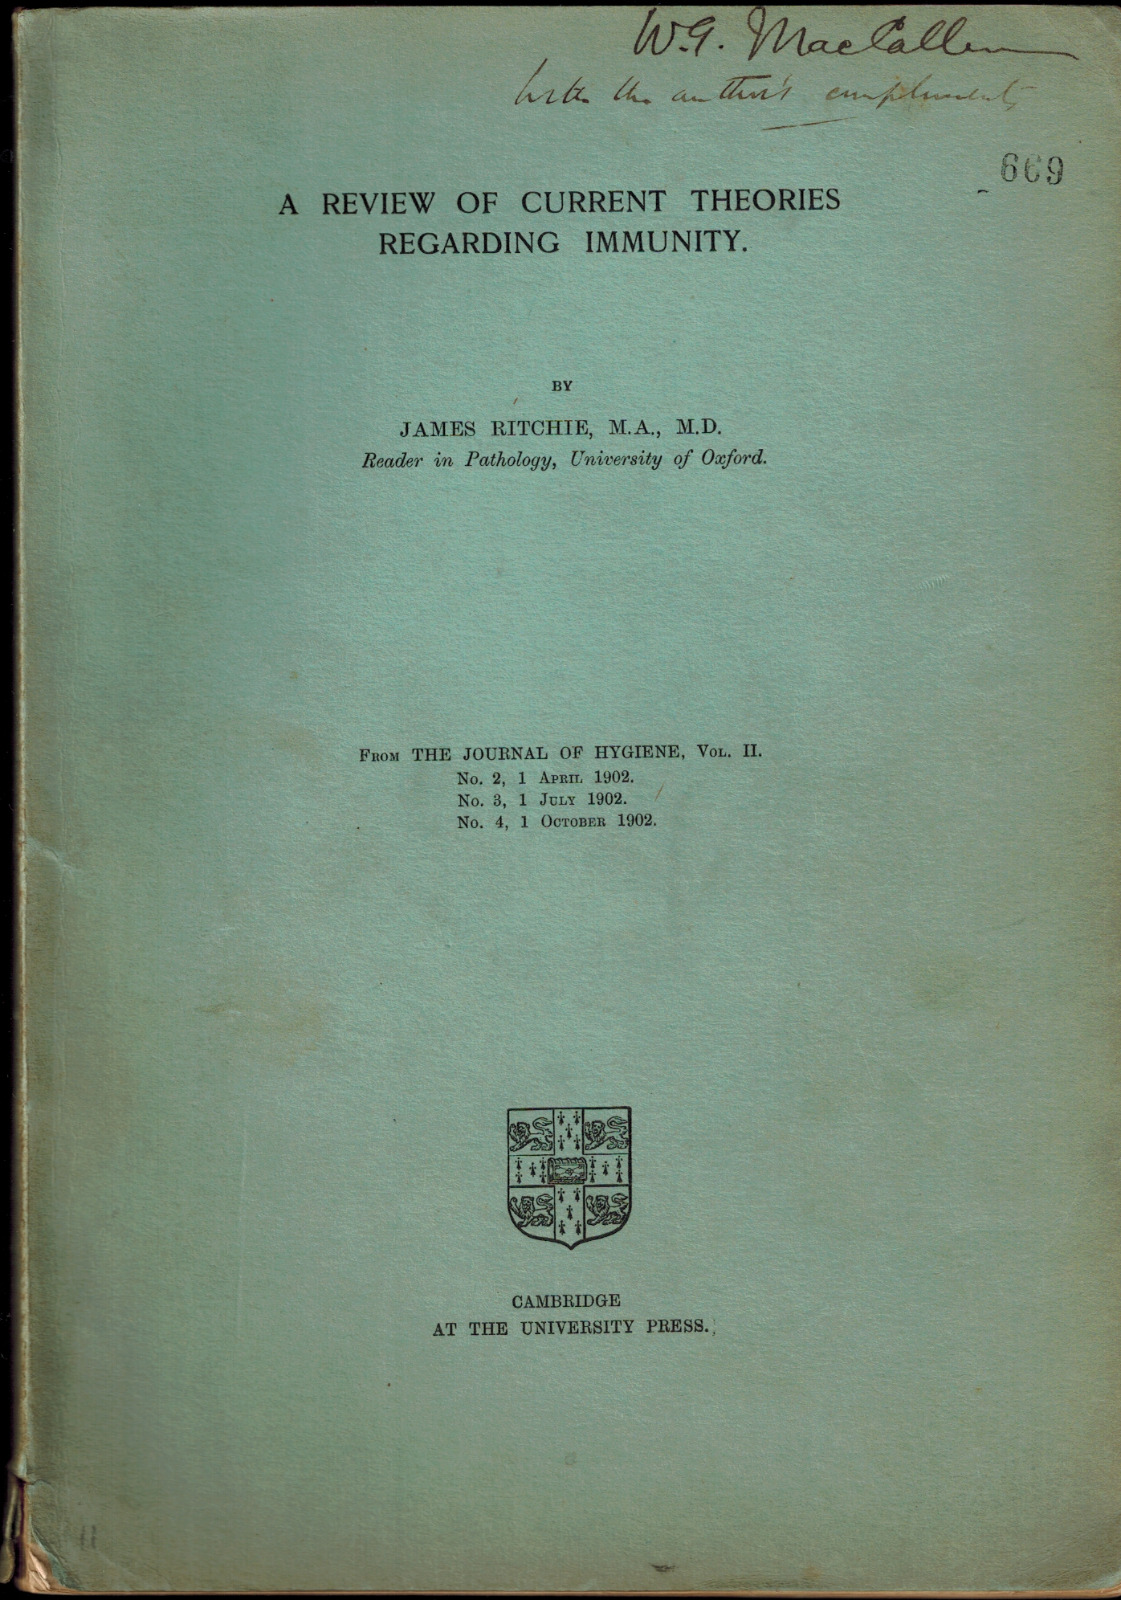 1902 Theories of Immunity, Immunology, Bacteriology, Pathology Toxins Toxicology